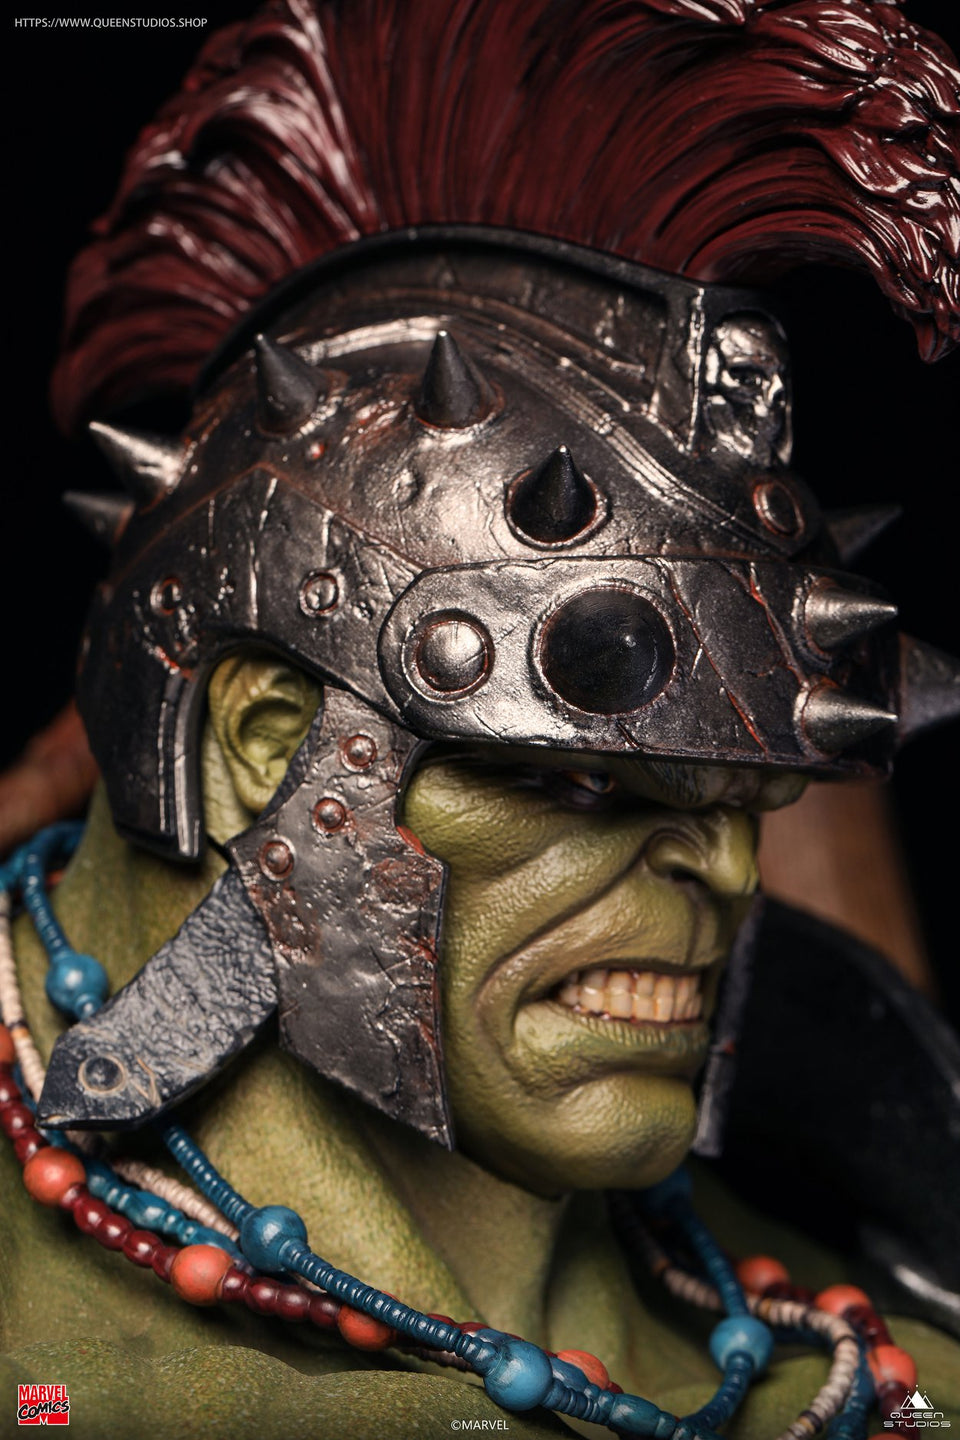 Queen Studios Green Scar Hulk 1:4 Scale Statue (2 Versions)